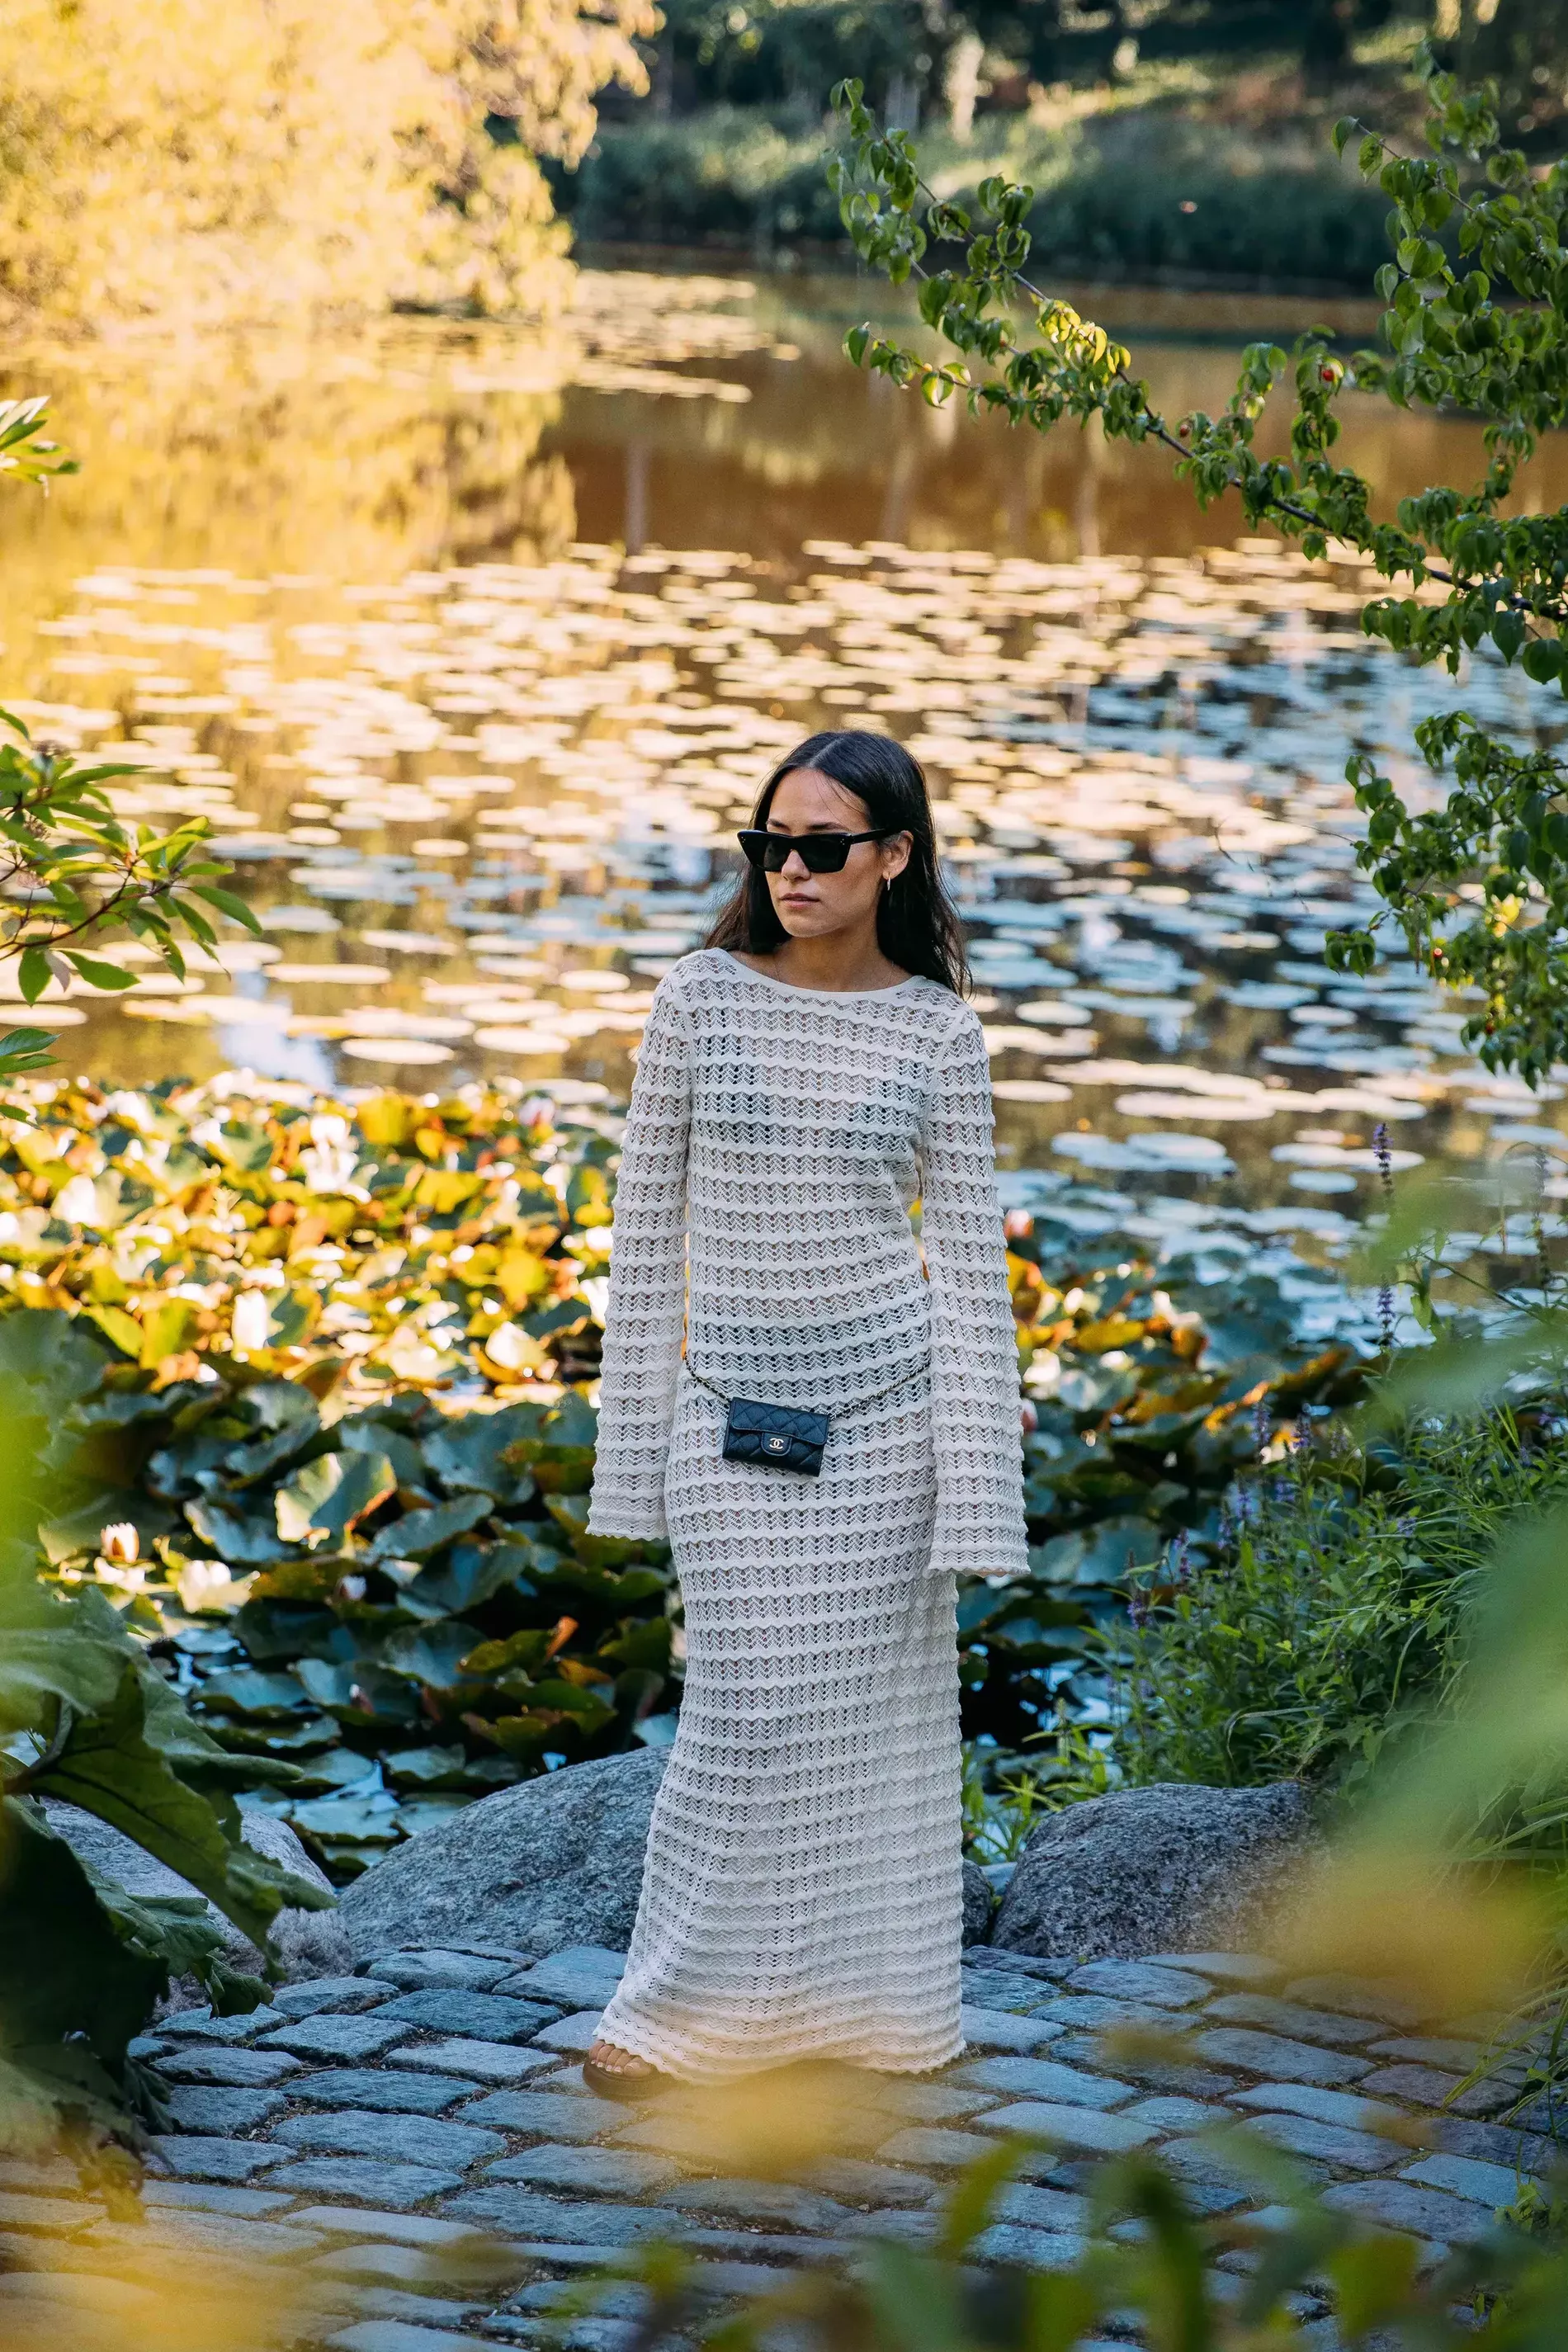 Copenhagen fashion week guest wears white crochet dress paired with Chanel 